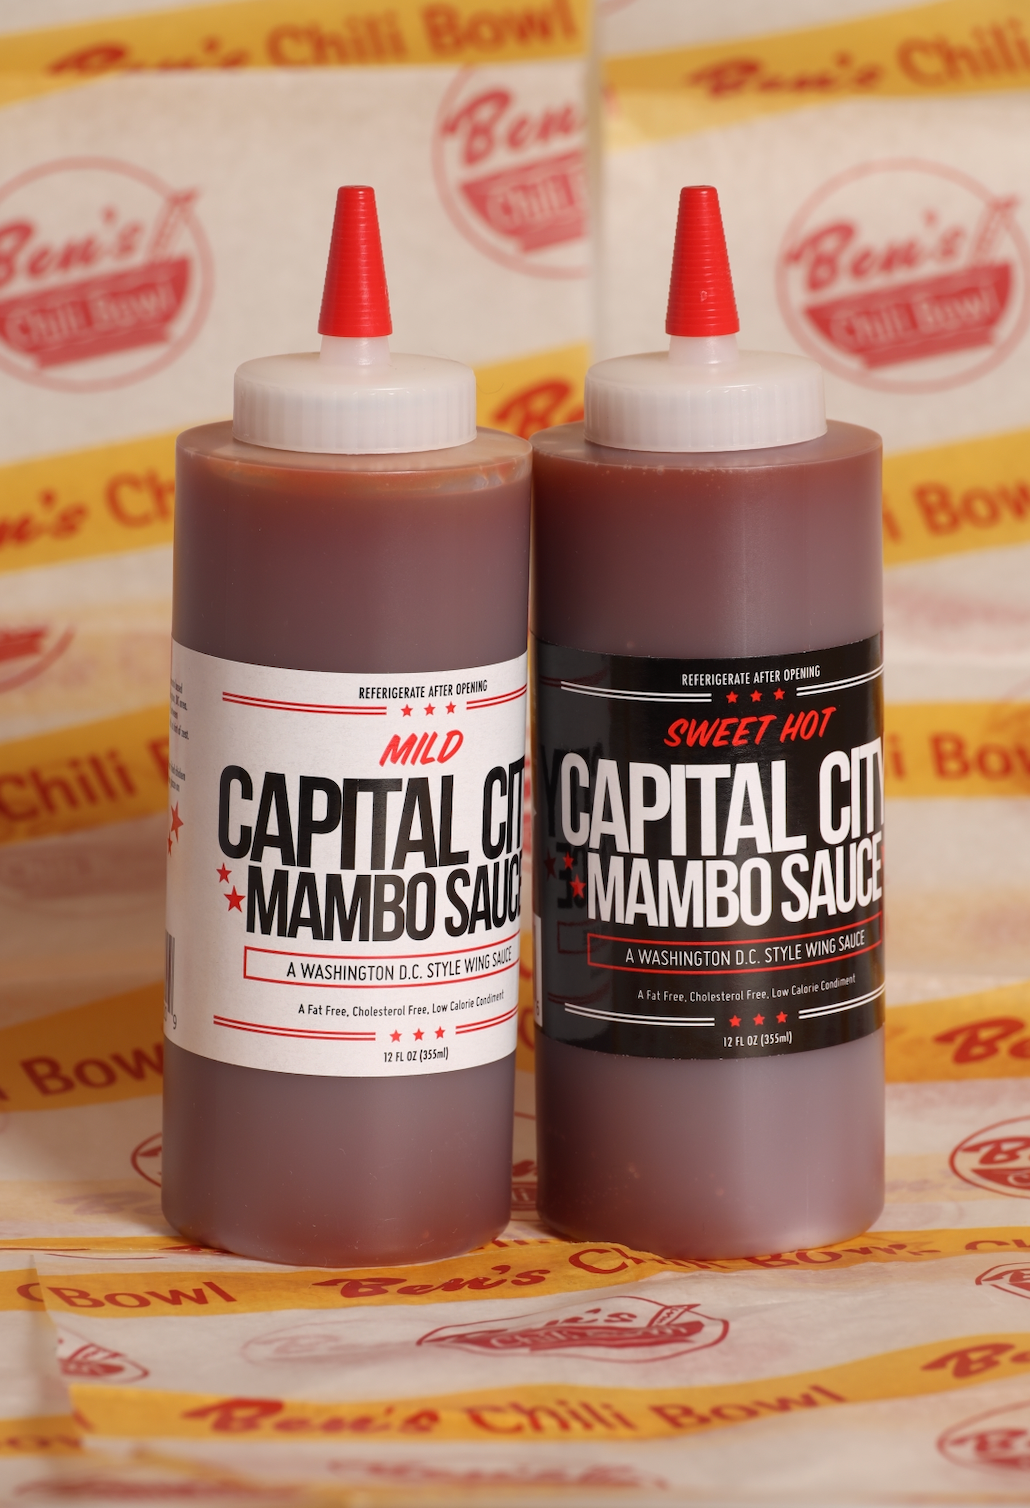 Capital City Mambo Sauce - Variety 2 Pack - Sweet Hot & Mild